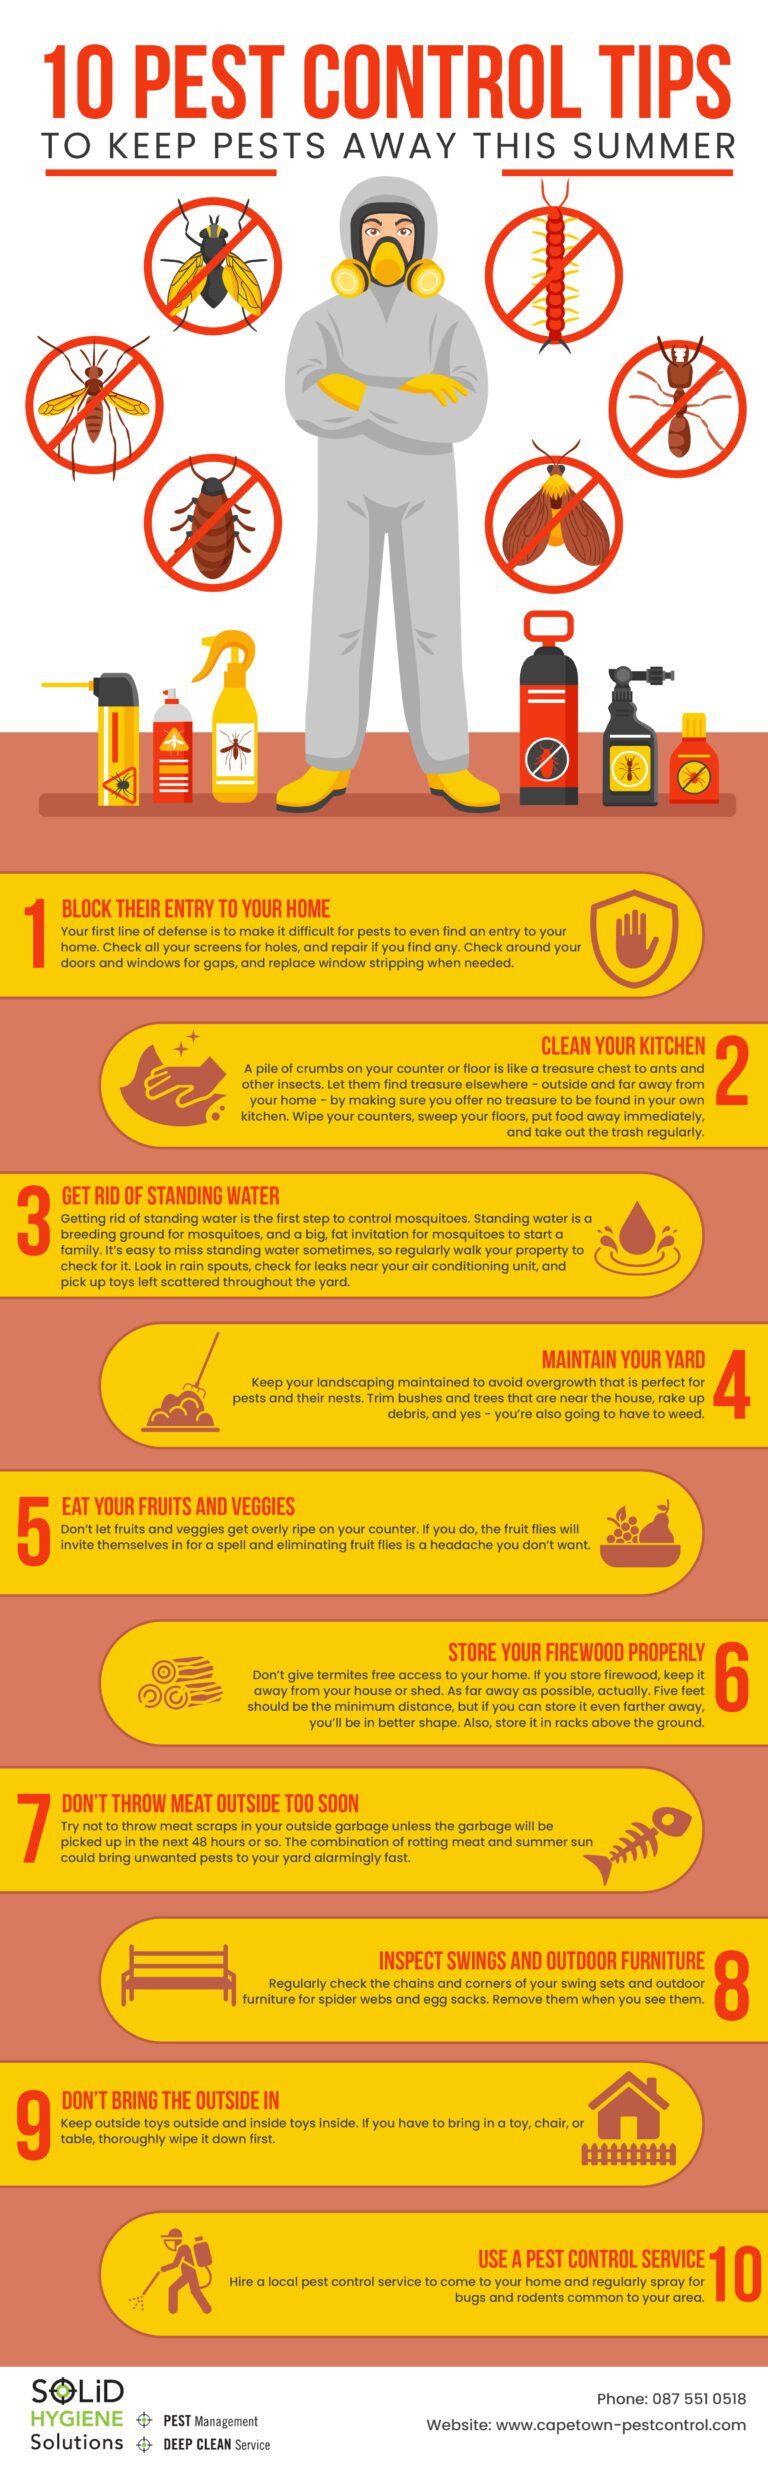 Tips for Effective Preventative Pest Control